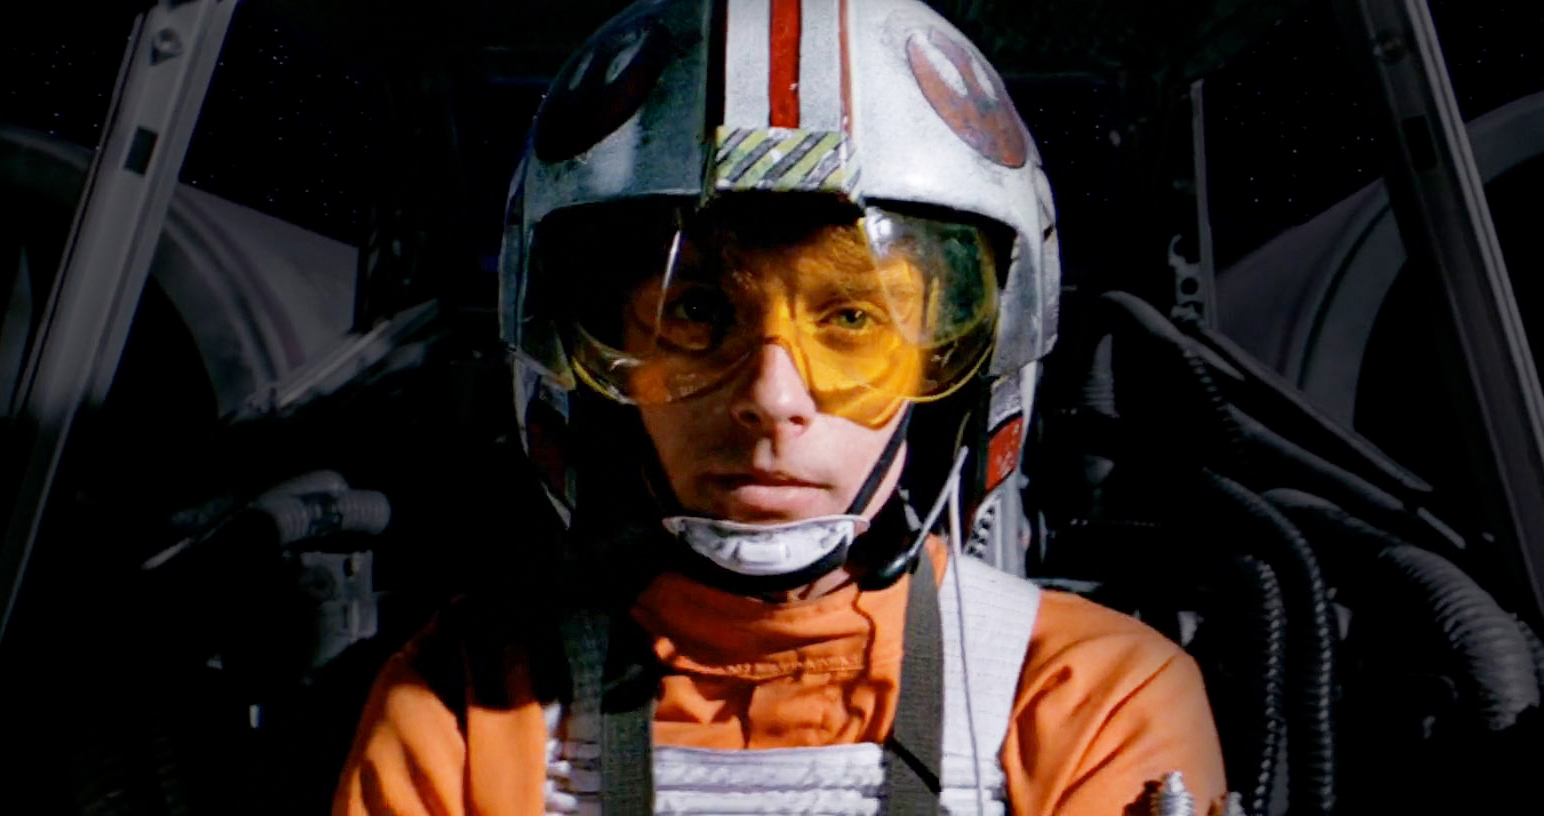 Люк на шлеме. Люк Скайуокер пилот. Люк Скайуокер в костюме пилота. Люк Скайуокер пилот в шлеме. Star Wars пилот повстанцев.